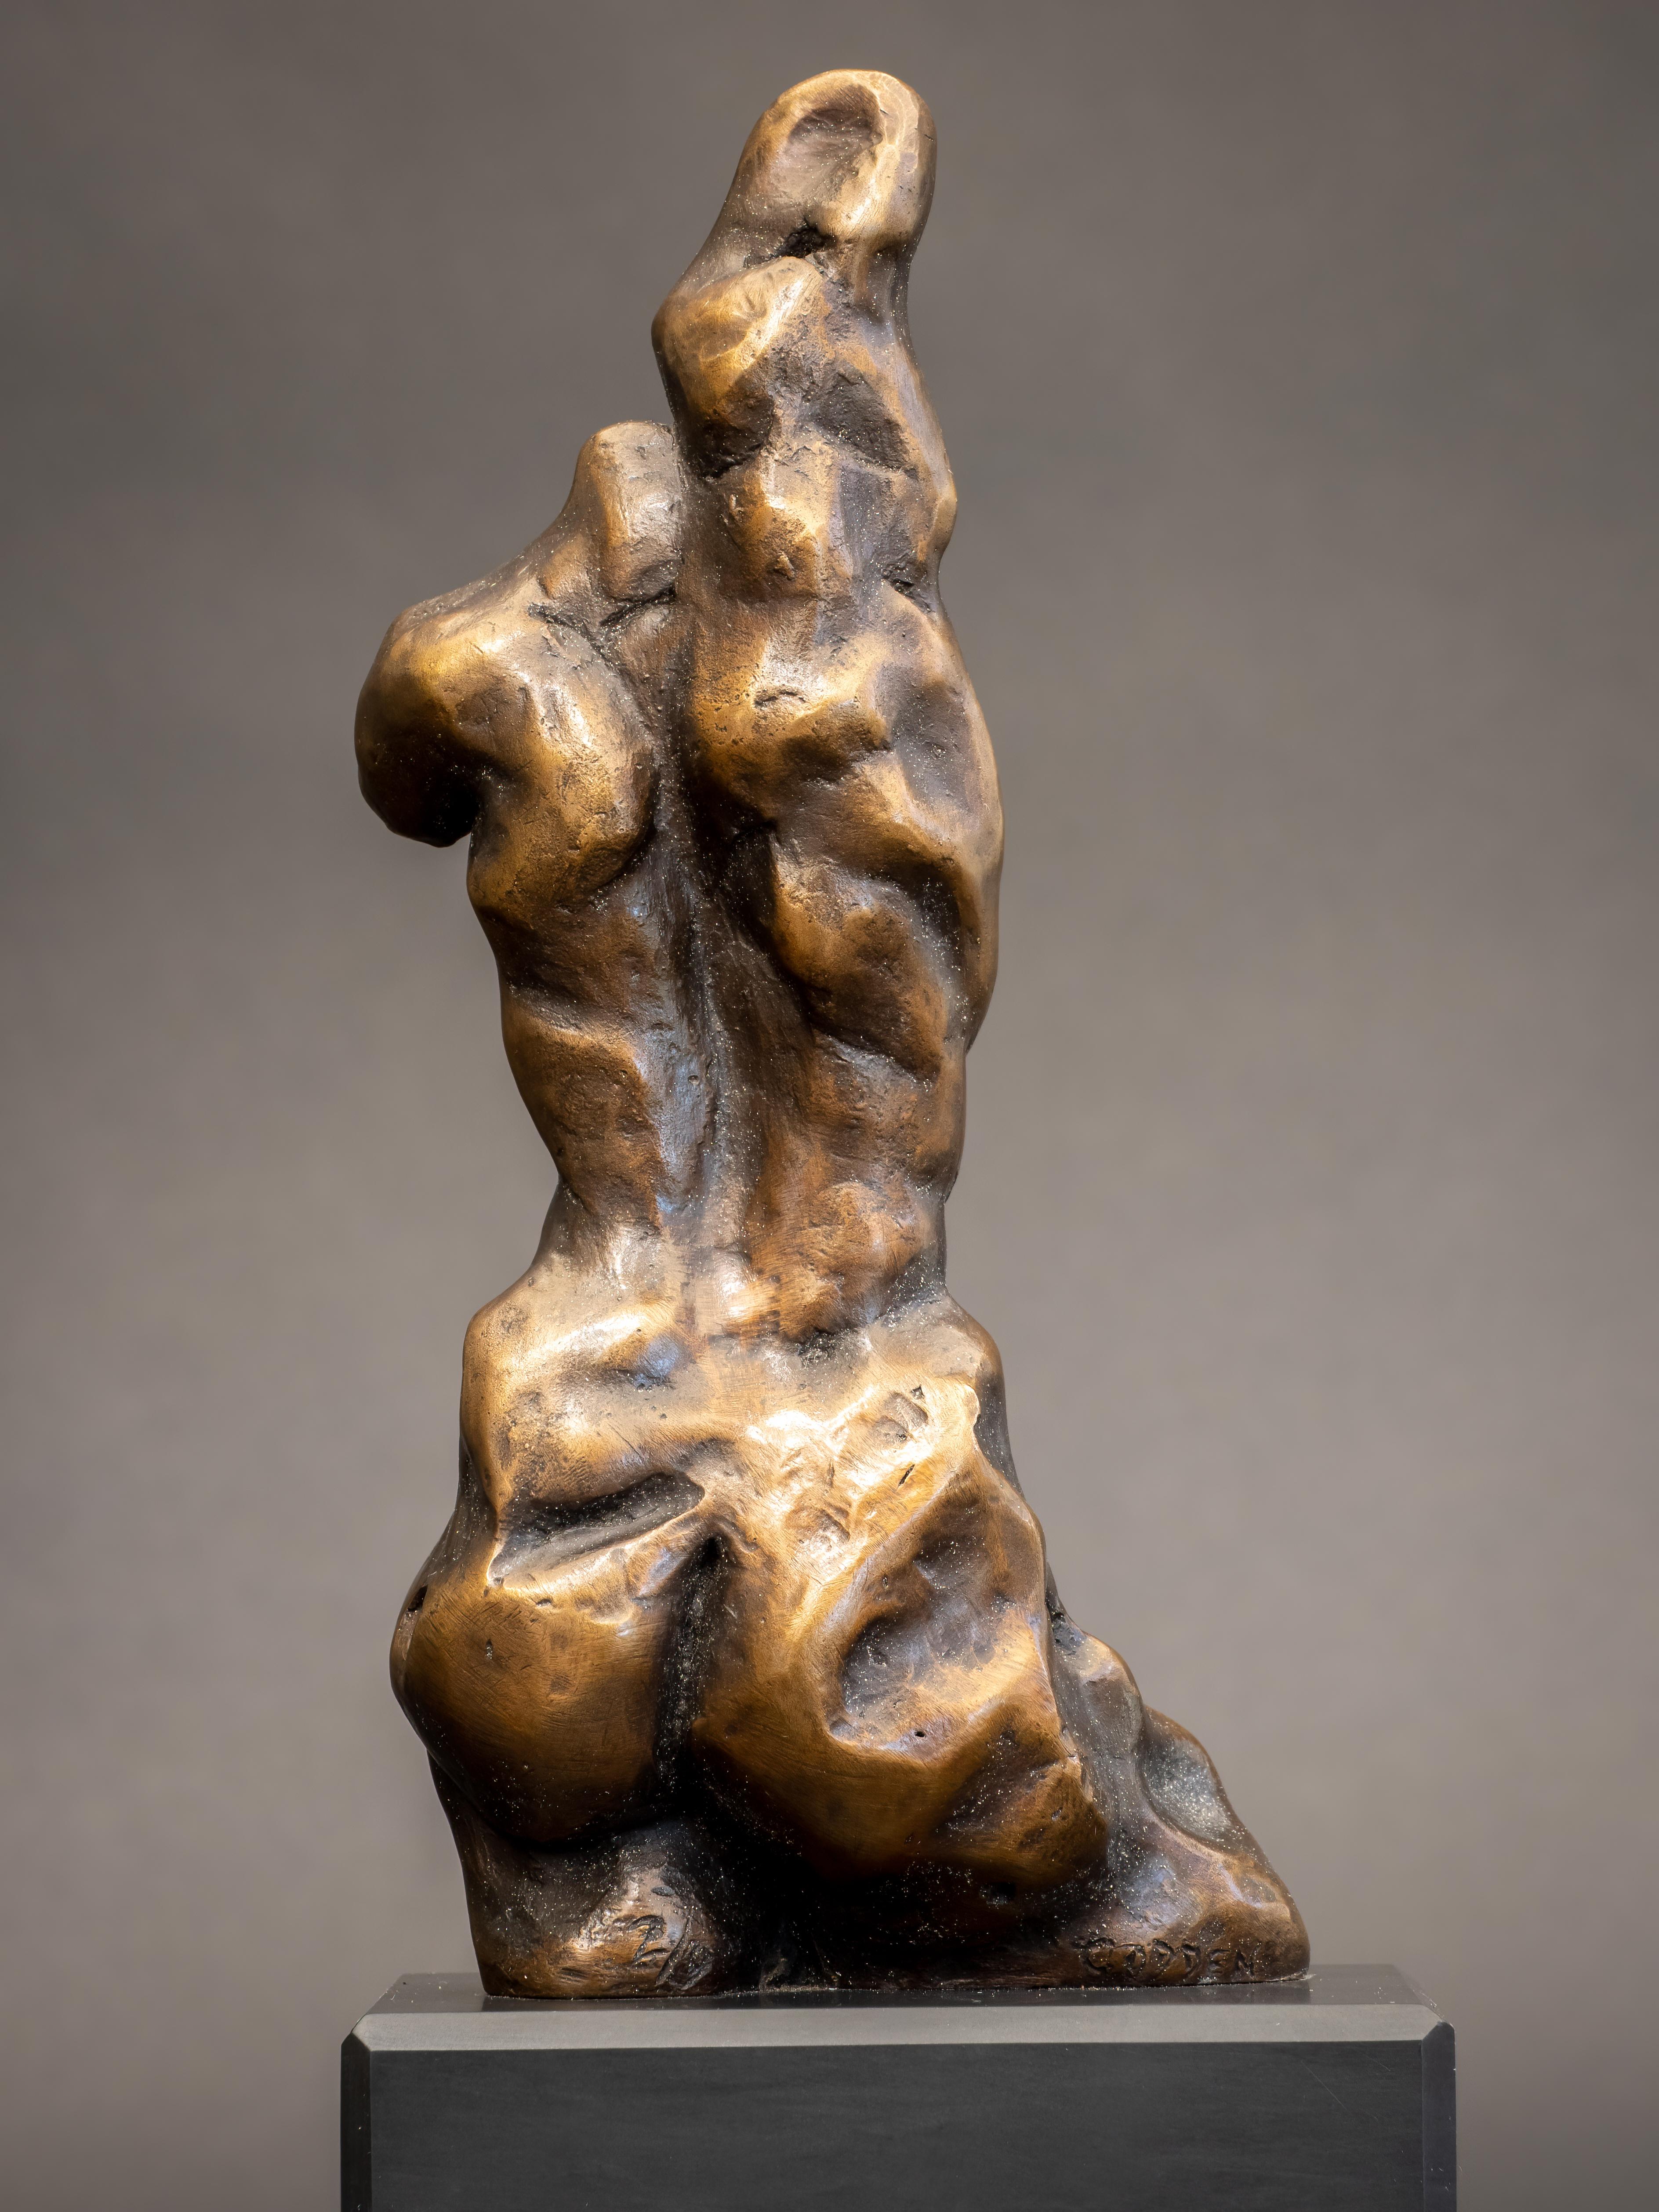 Adam II-original figurative bronze sculptures-artworks for sale-contemporary Art - Gold Figurative Sculpture by Nicola Godden